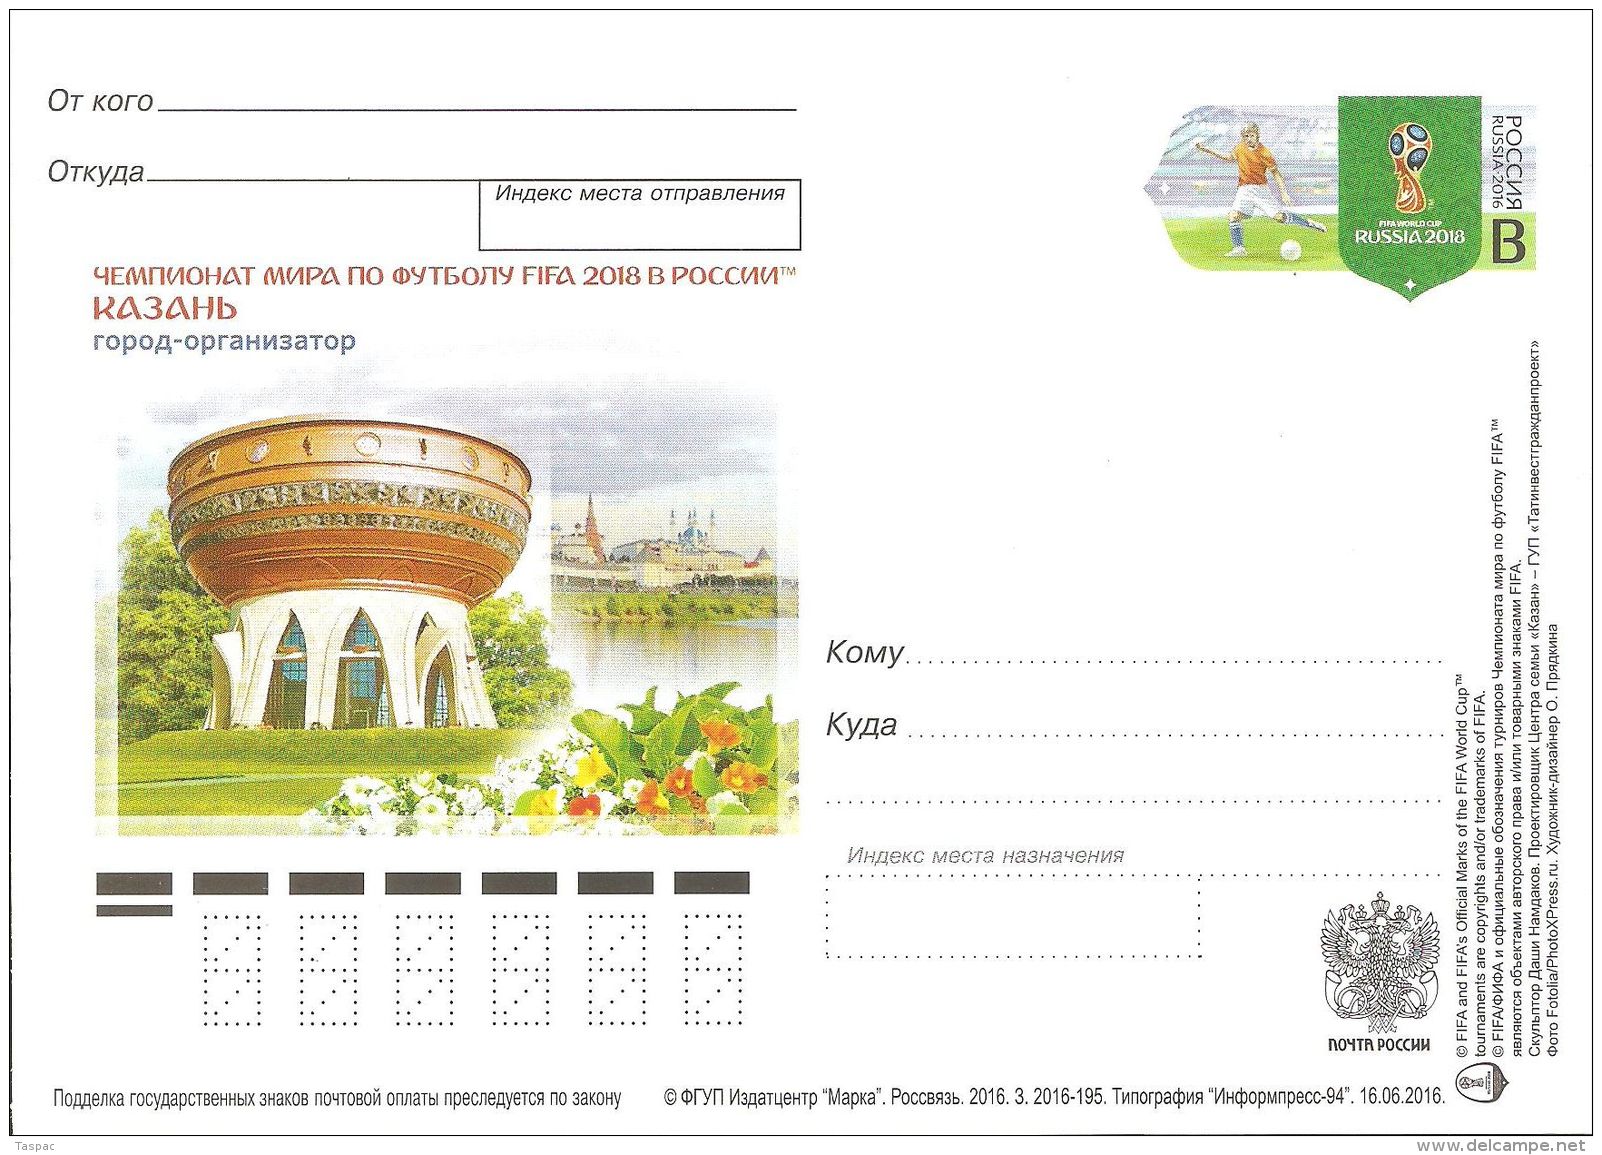 Russia 2016 # 195 Postal Stationery Postcard Unused - World Cup Soccer Championship 2018 / Kazan - 2018 – Russia